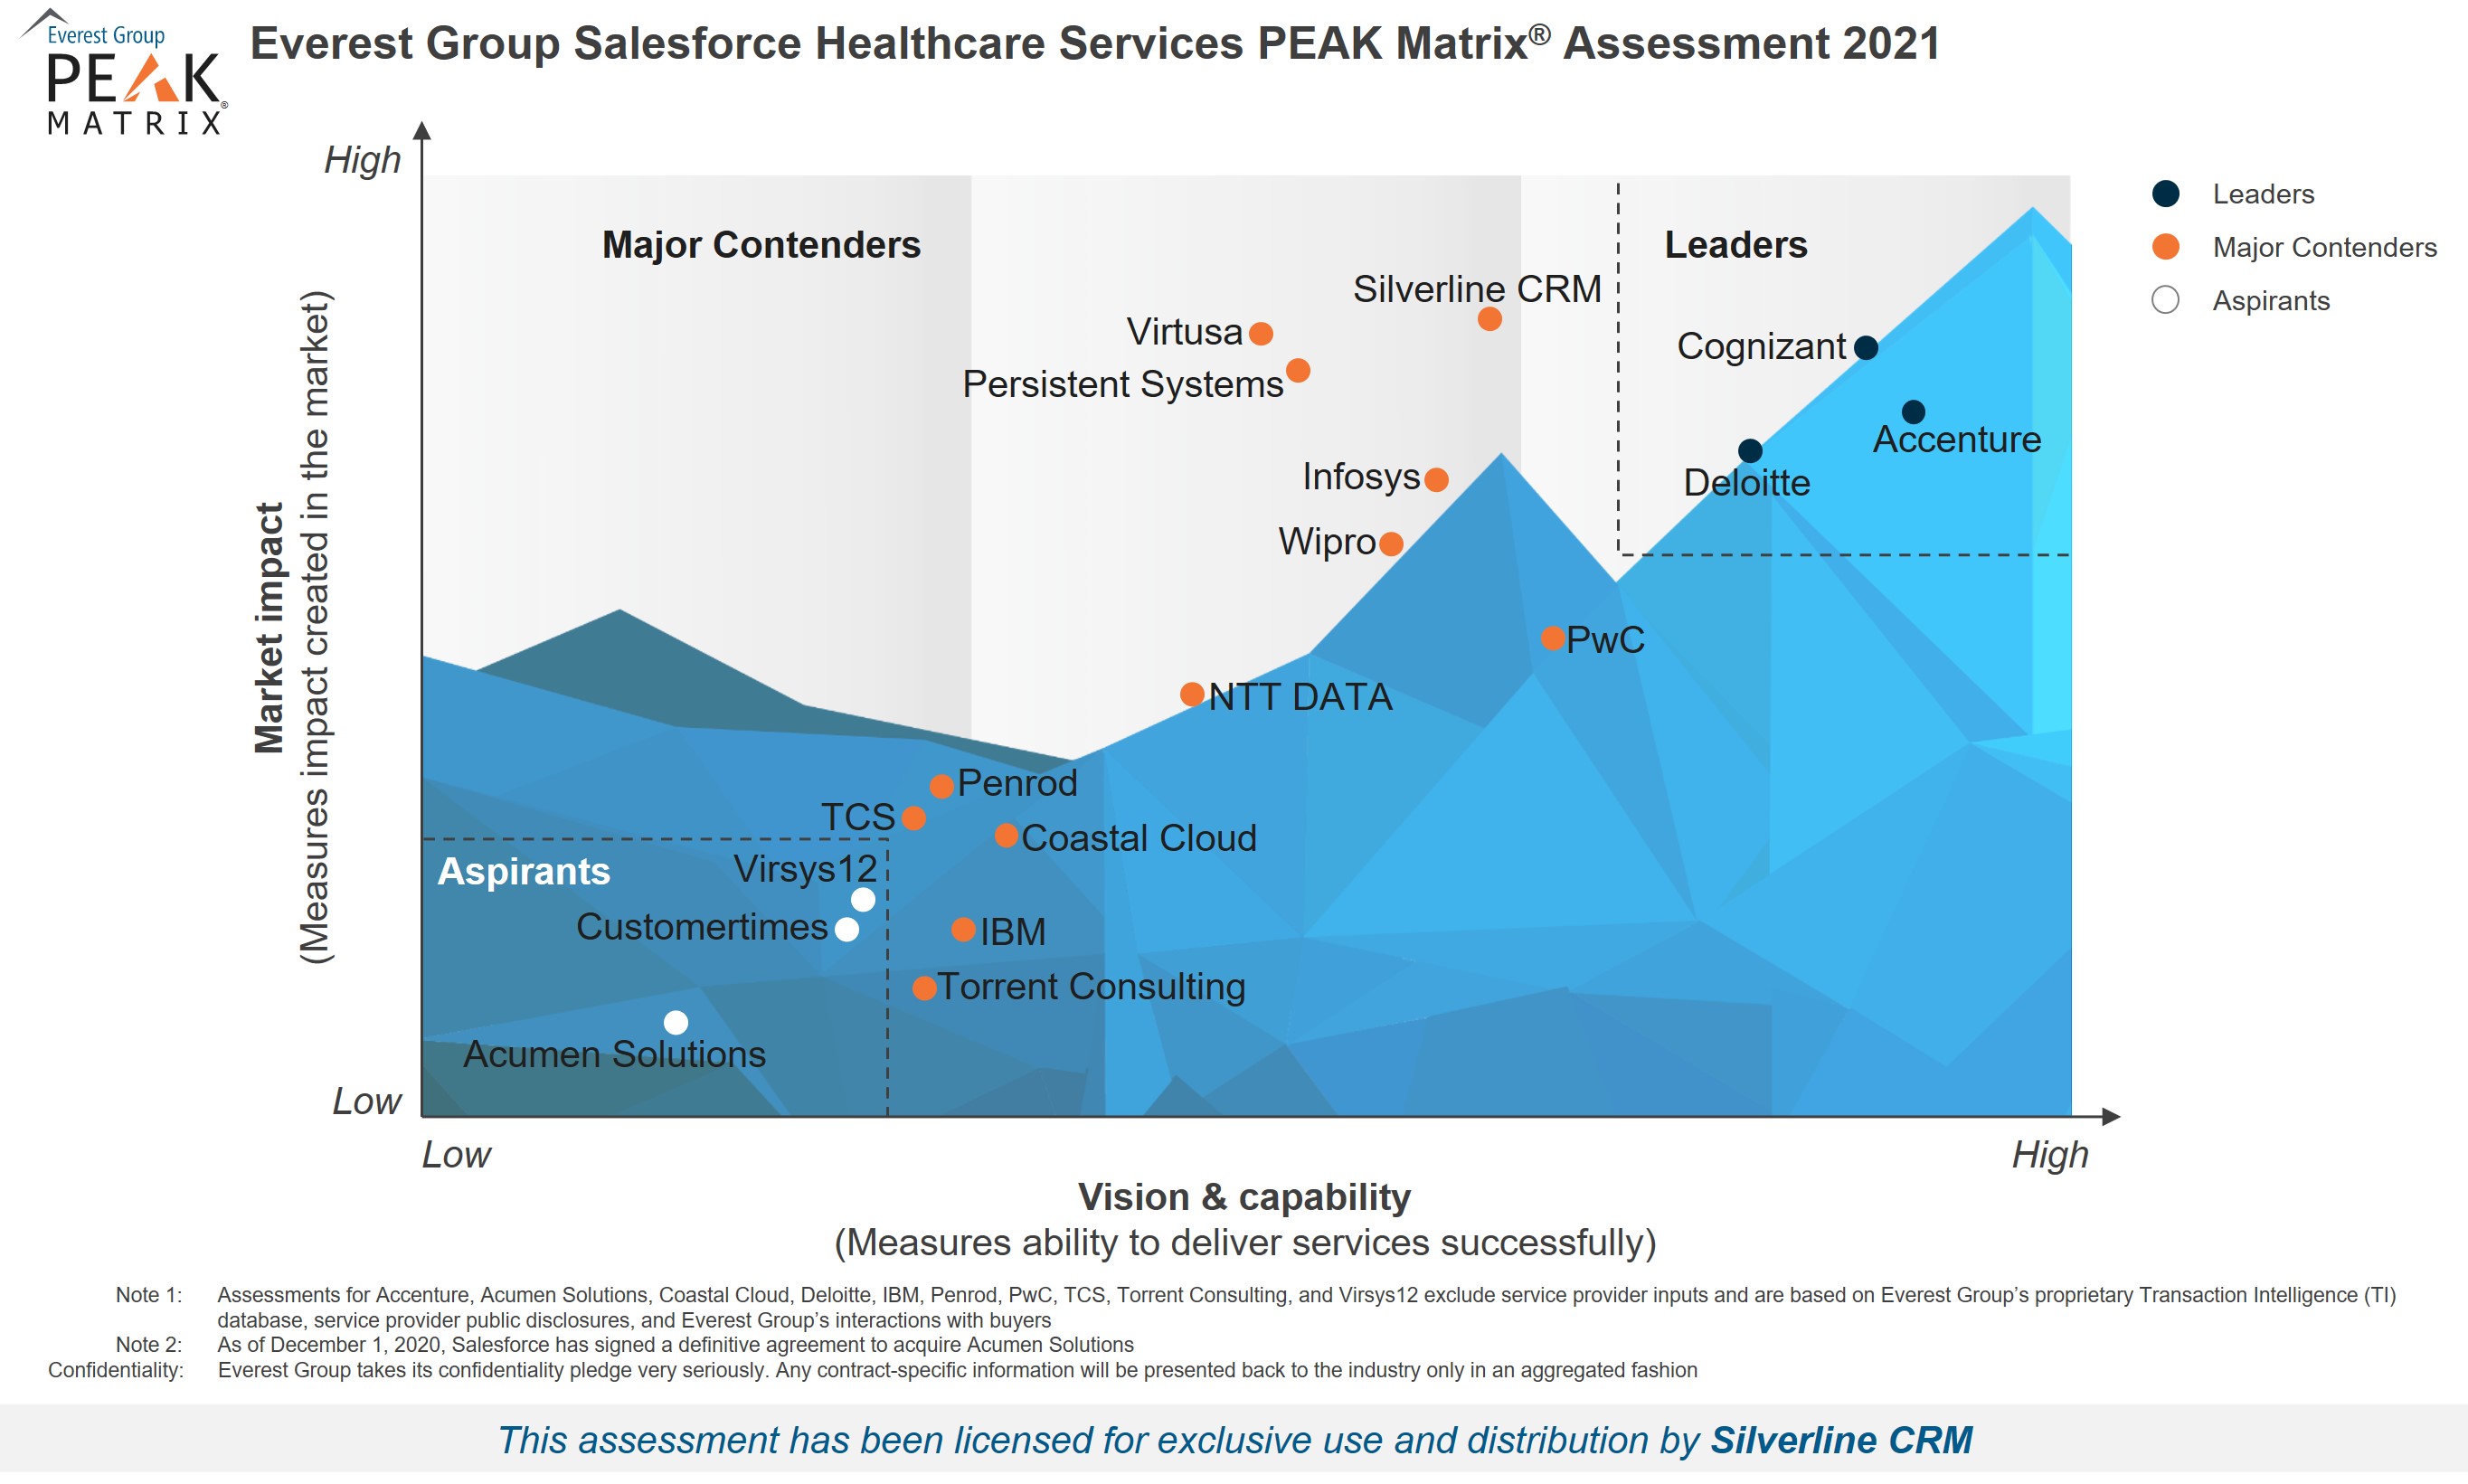 Everest Group PEAK Matrix for Salesforce Healthcare Services